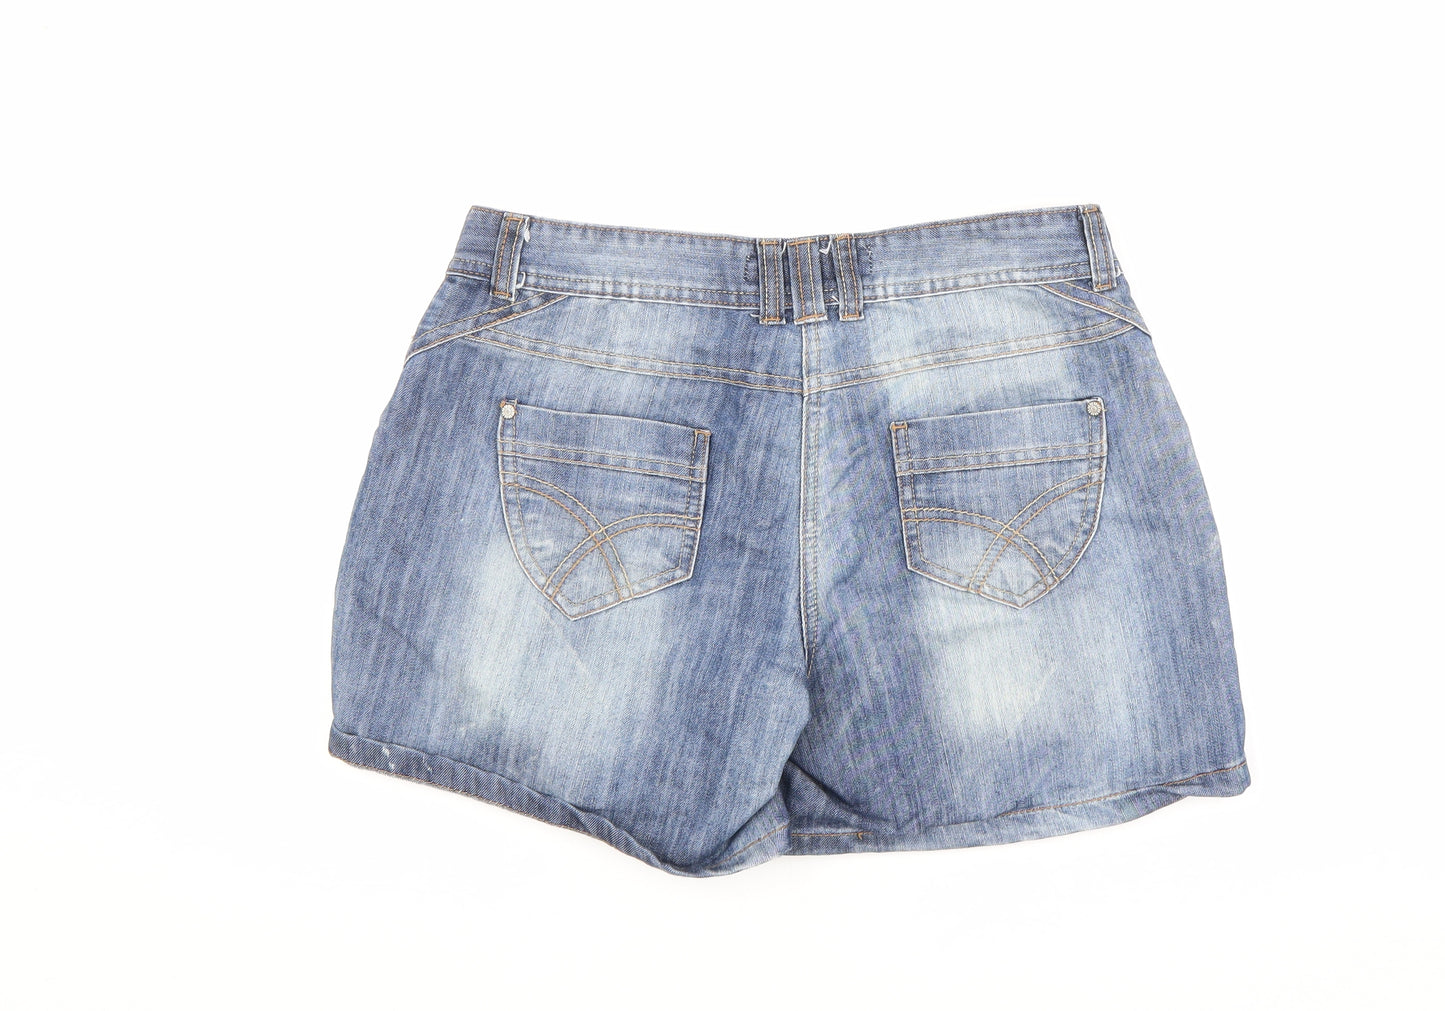 Be Beau Womens Blue Cotton Hot Pants Shorts Size 12 L4.5 in Regular Zip